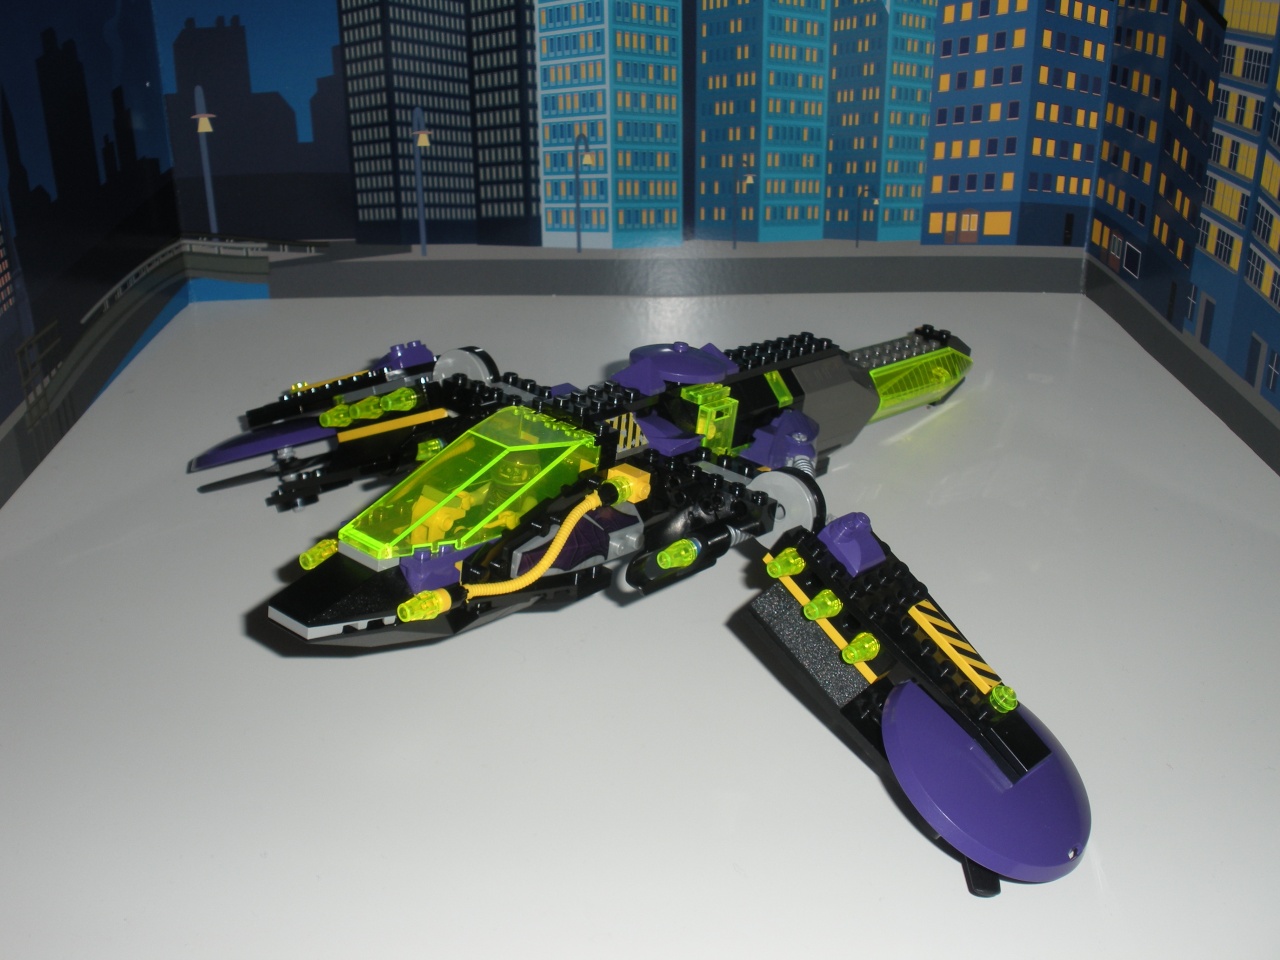 The Cyberfly Fighter Version I Cyberf16